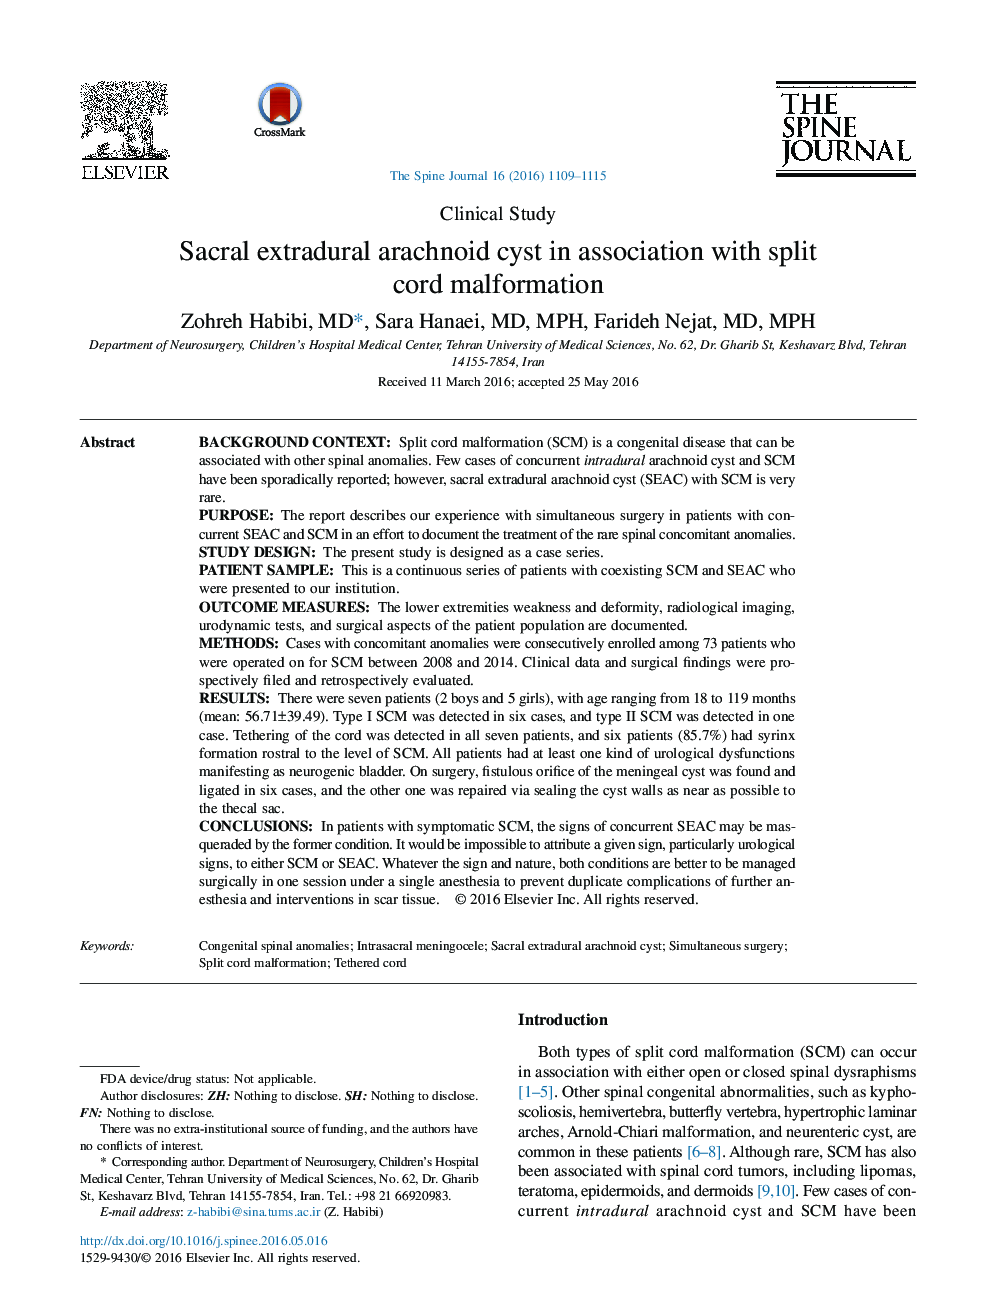 Sacral extradural arachnoid cyst in association with split cord malformation 